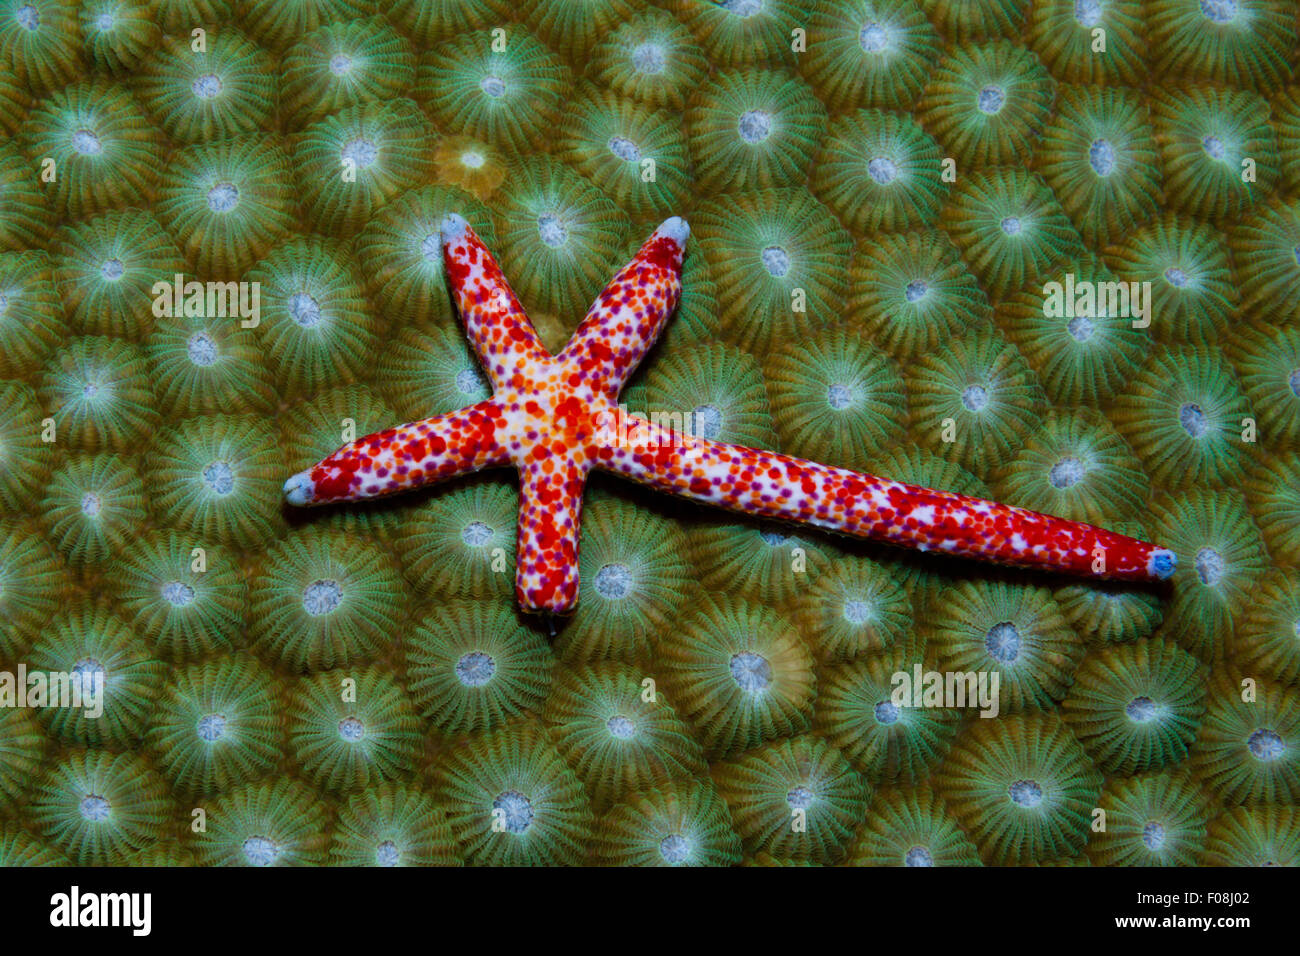 Comet Starfish regenerating, Linckia multifora, Russell Islands, Solomon Islands Stock Photo